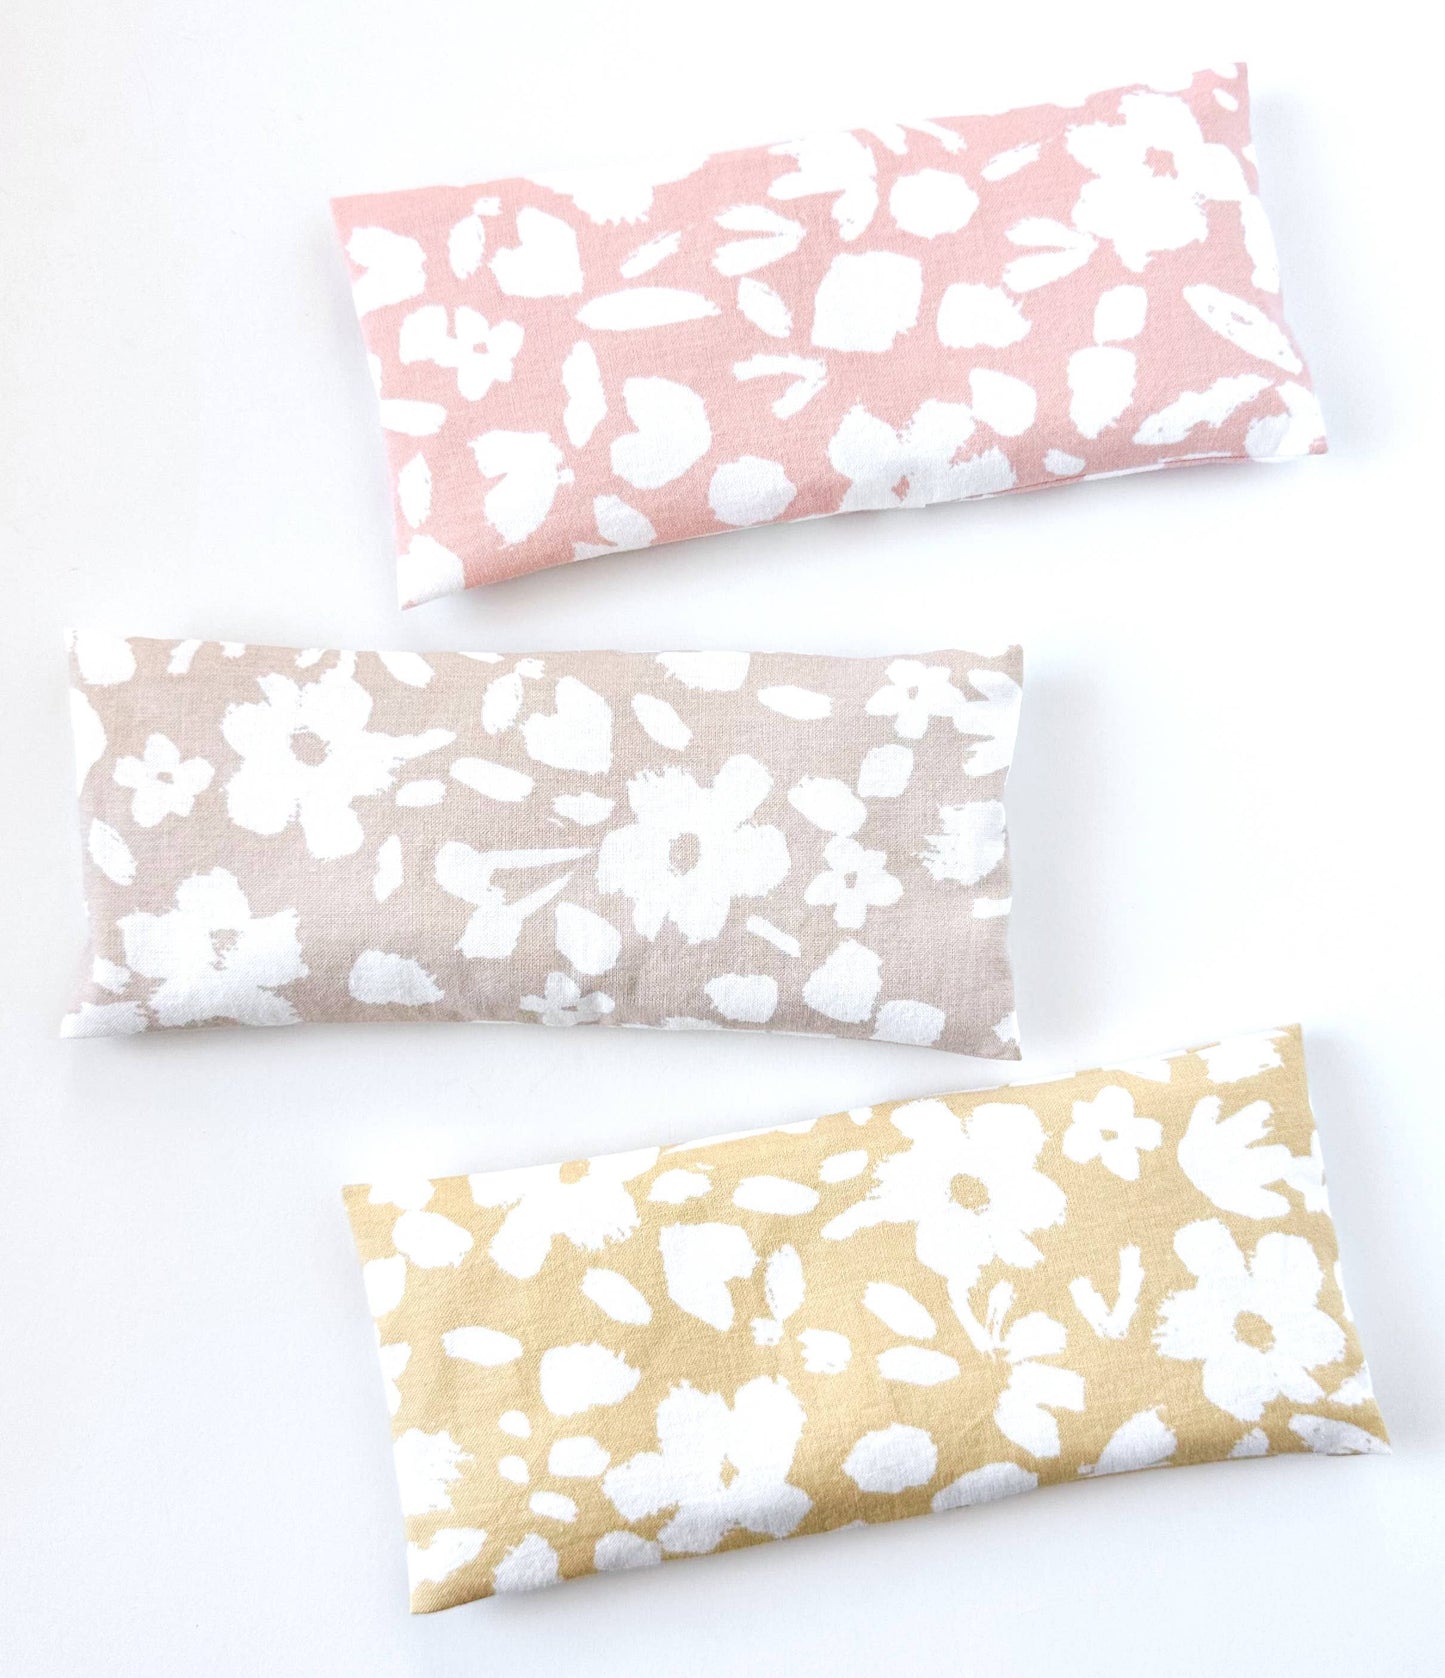 Organic Lavender Eye Pillow - Painted Flowers: Birch Core Laska Collection